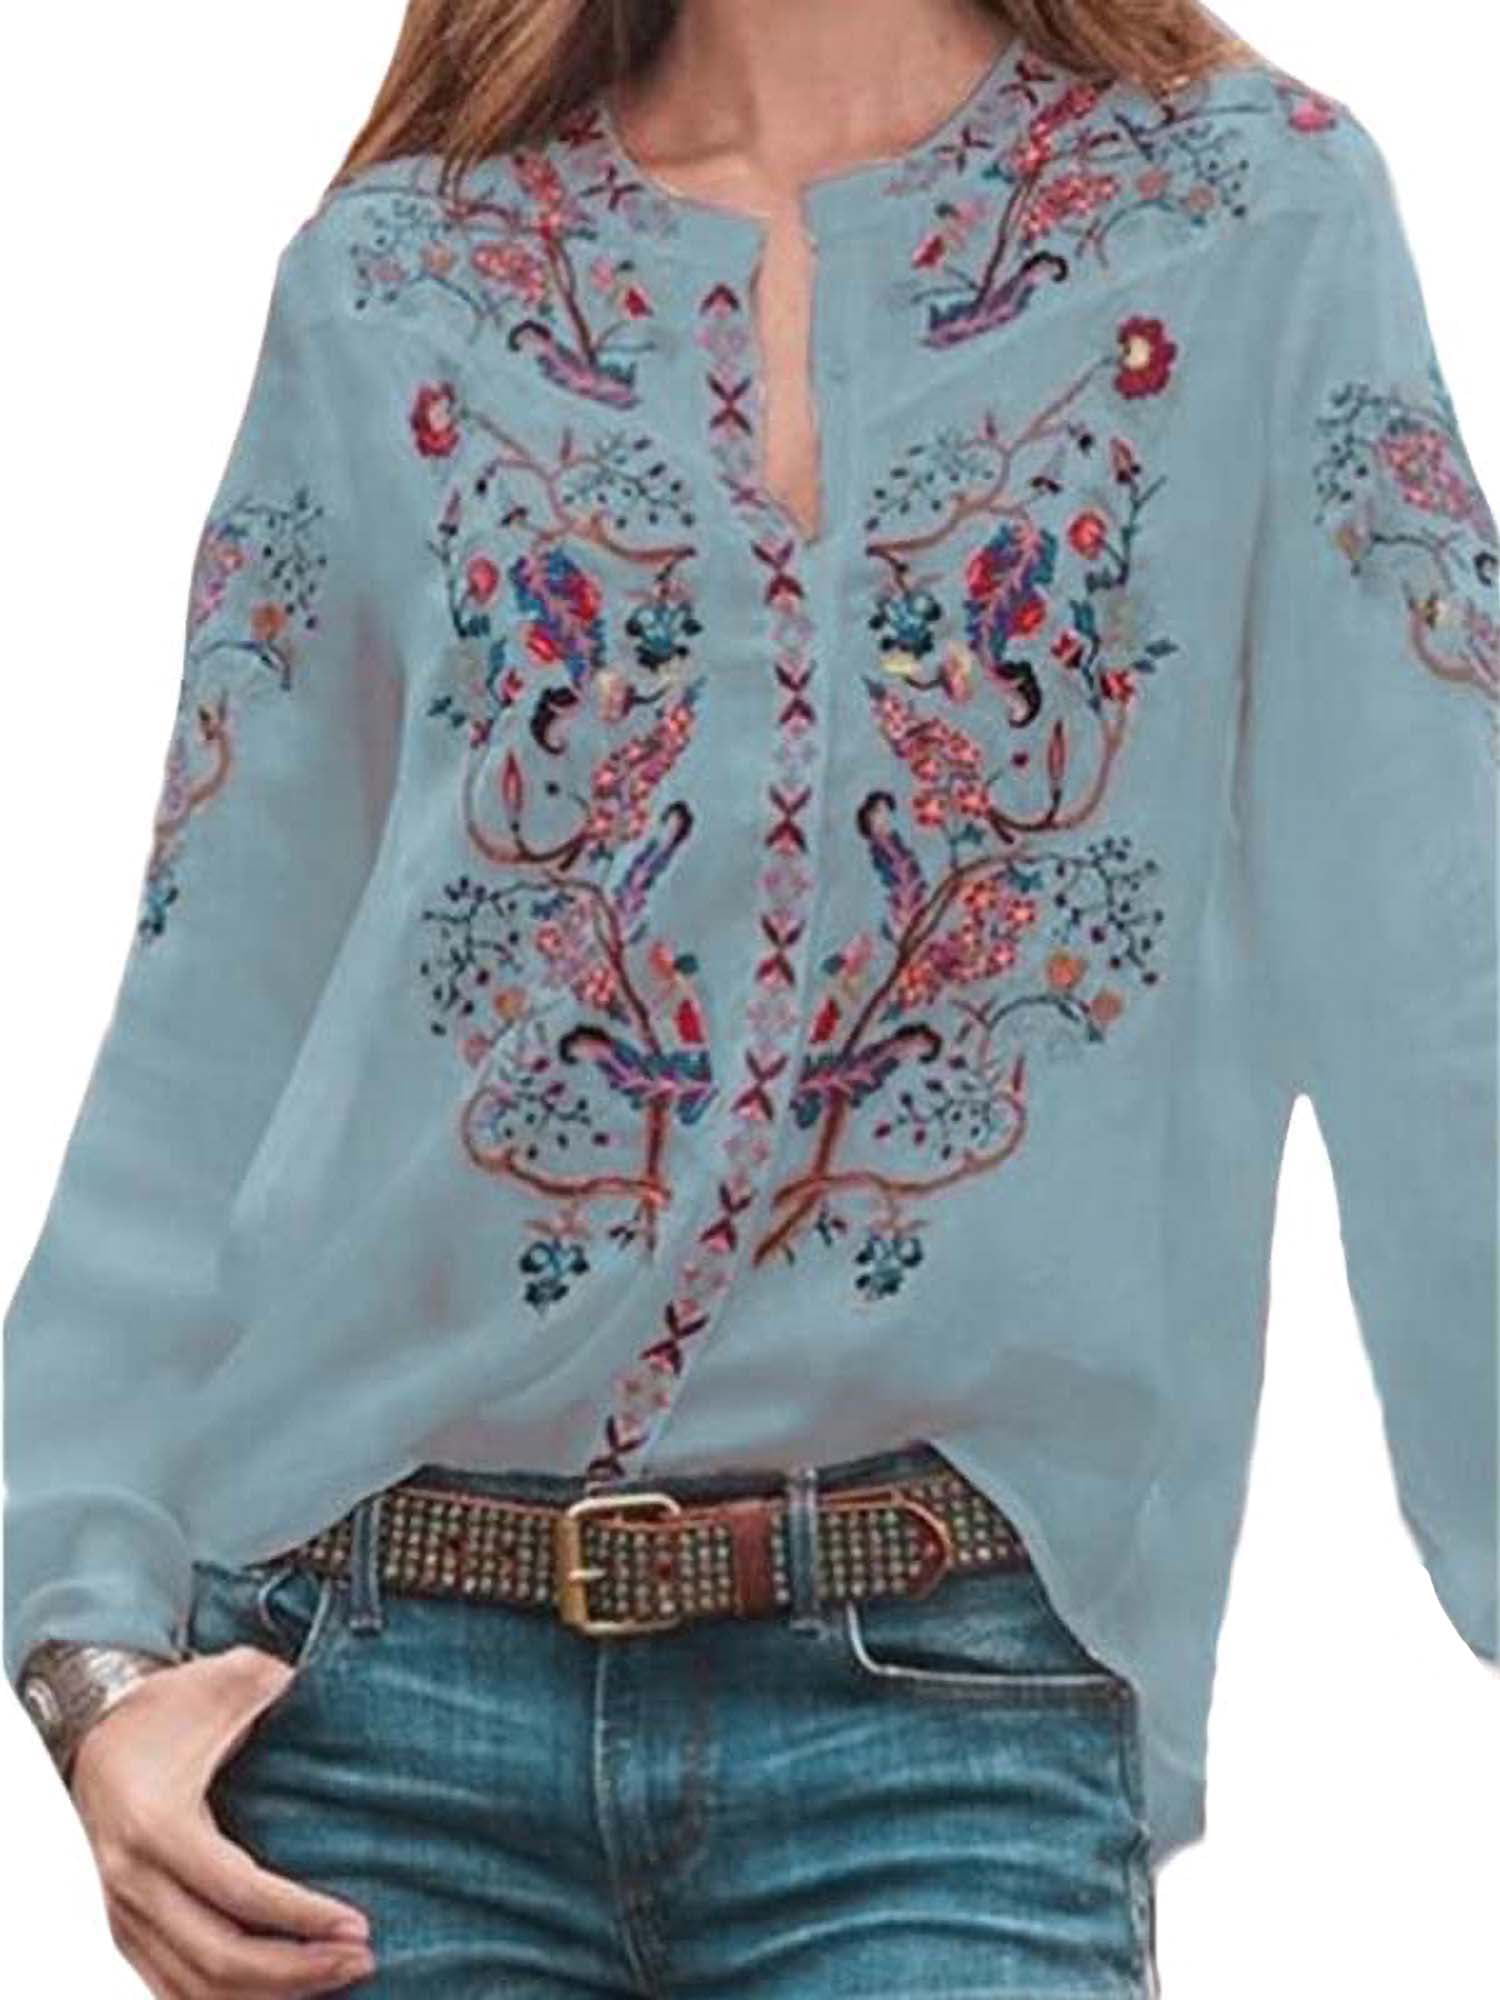 Embroidered Blouse Shirts Women Bird Fashion Long Sleeve Turn Down Collar Cotton